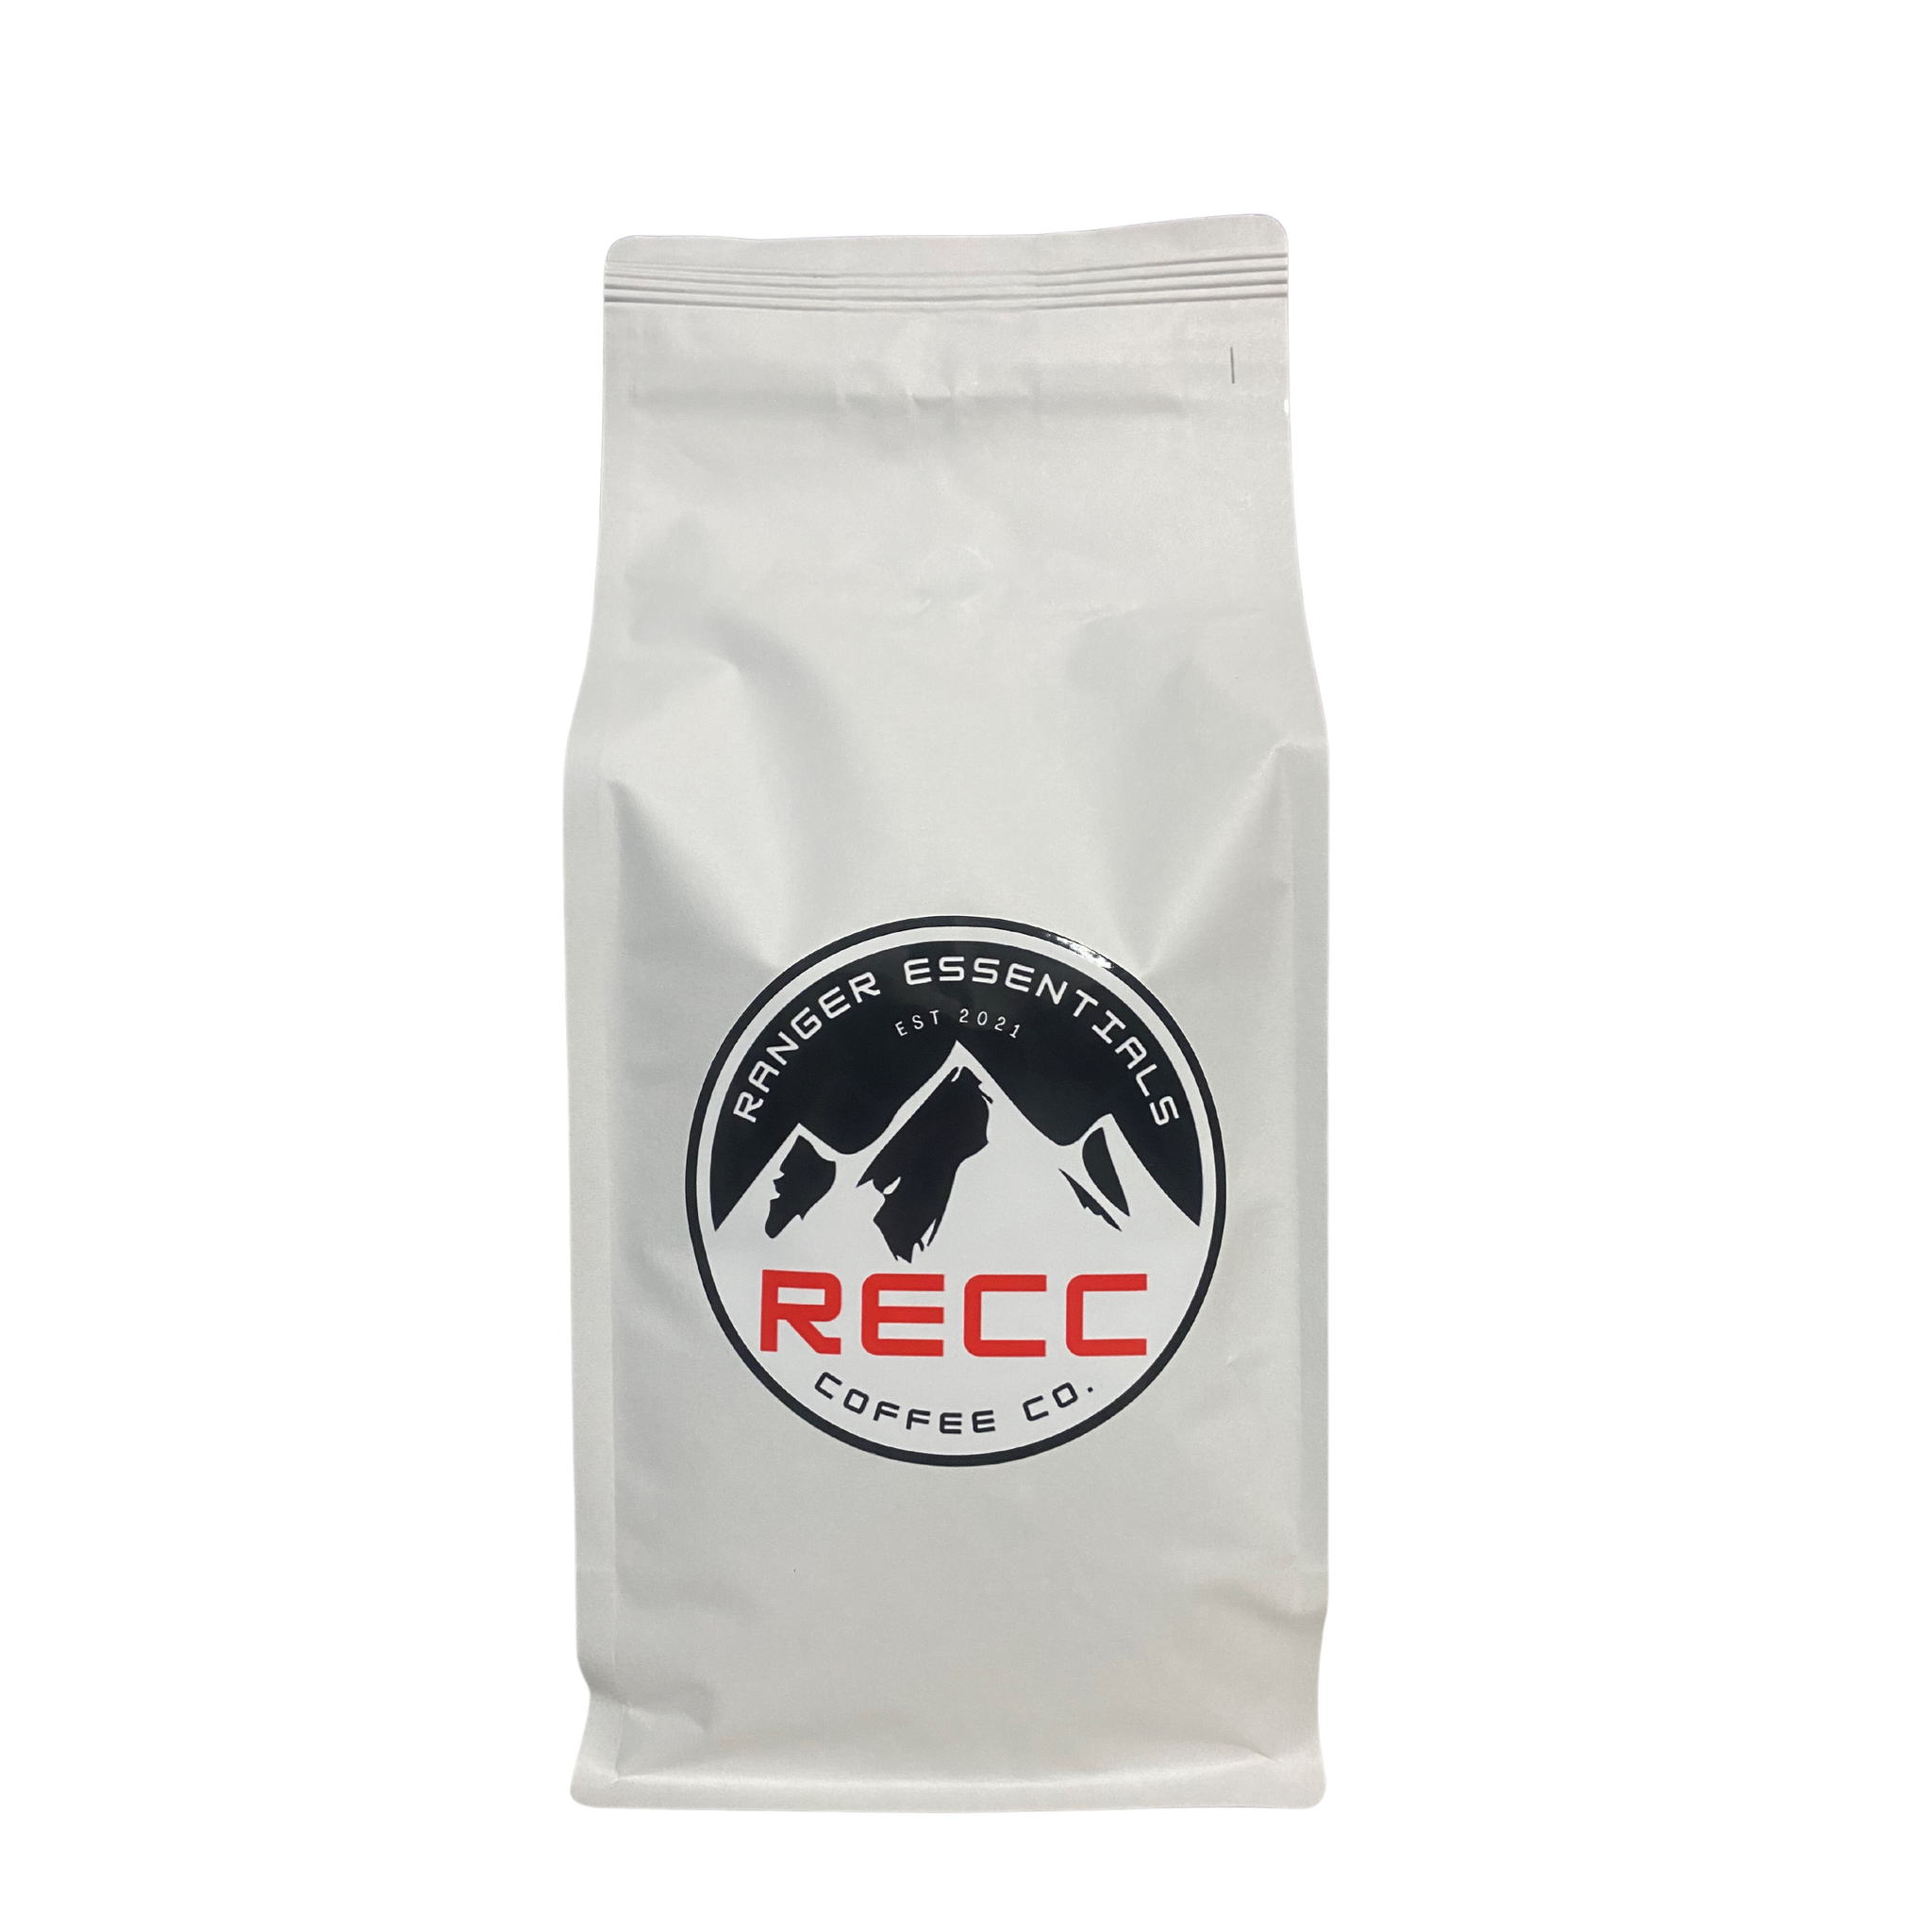 Ranger Essentials Grizzly Coffee Single Origin Fair Trade Organic Dark Roast Ethiopian Coffee (2 lb bag)